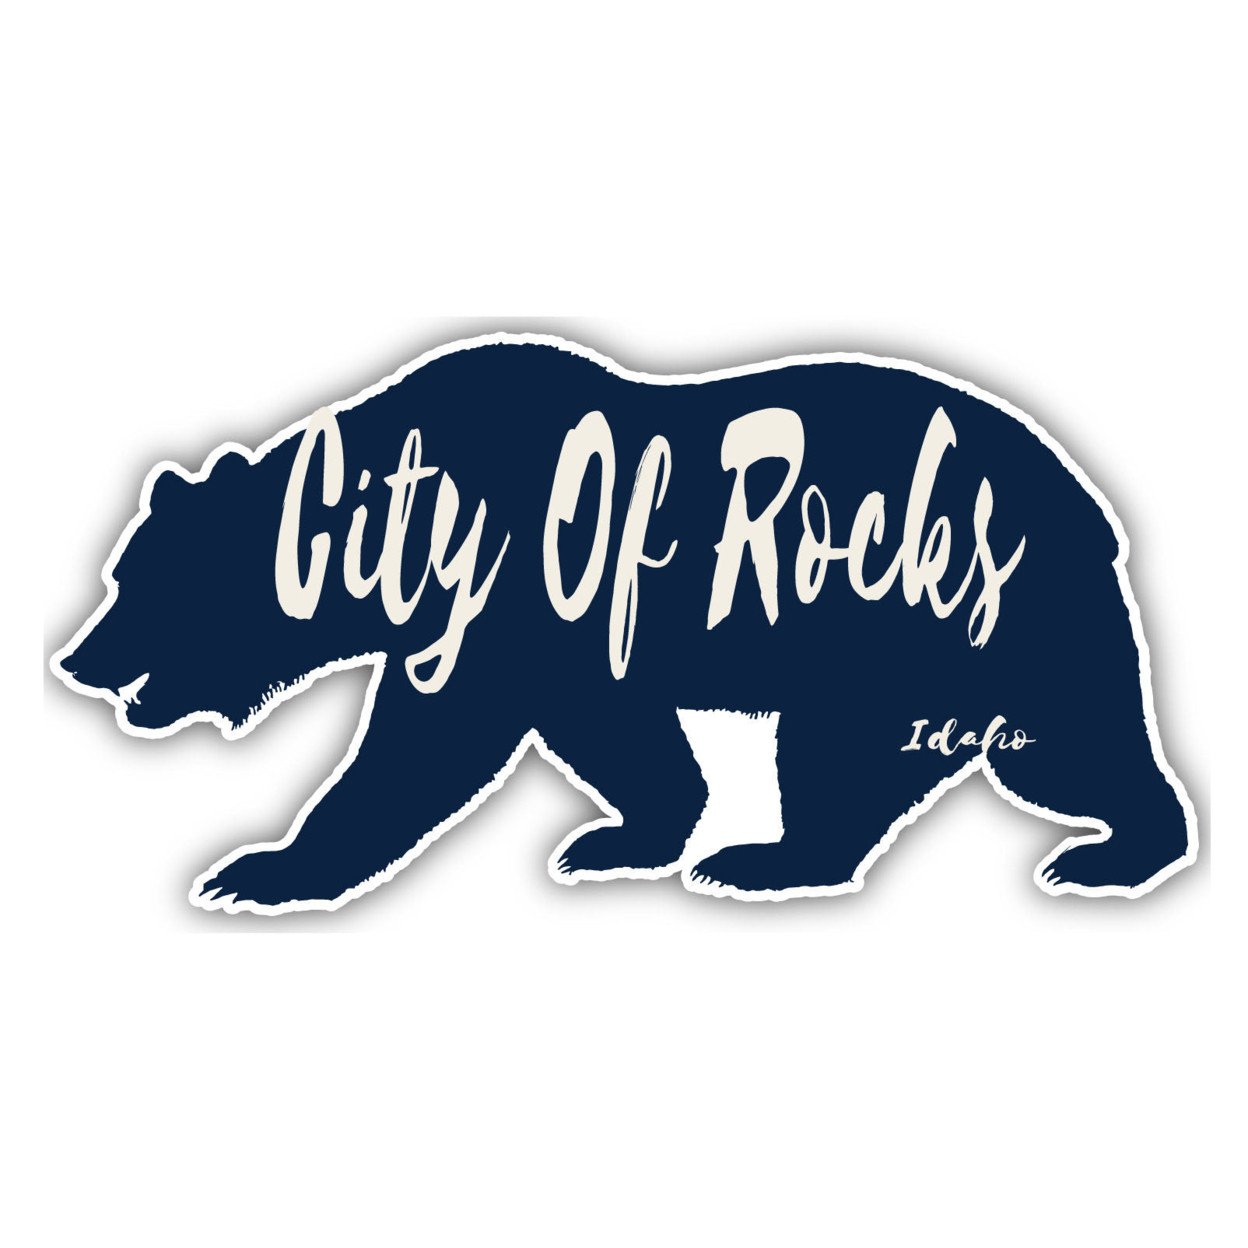 City Of Rocks Idaho Souvenir Decorative Stickers (Choose Theme And Size) - Single Unit, 4-Inch, Camp Life